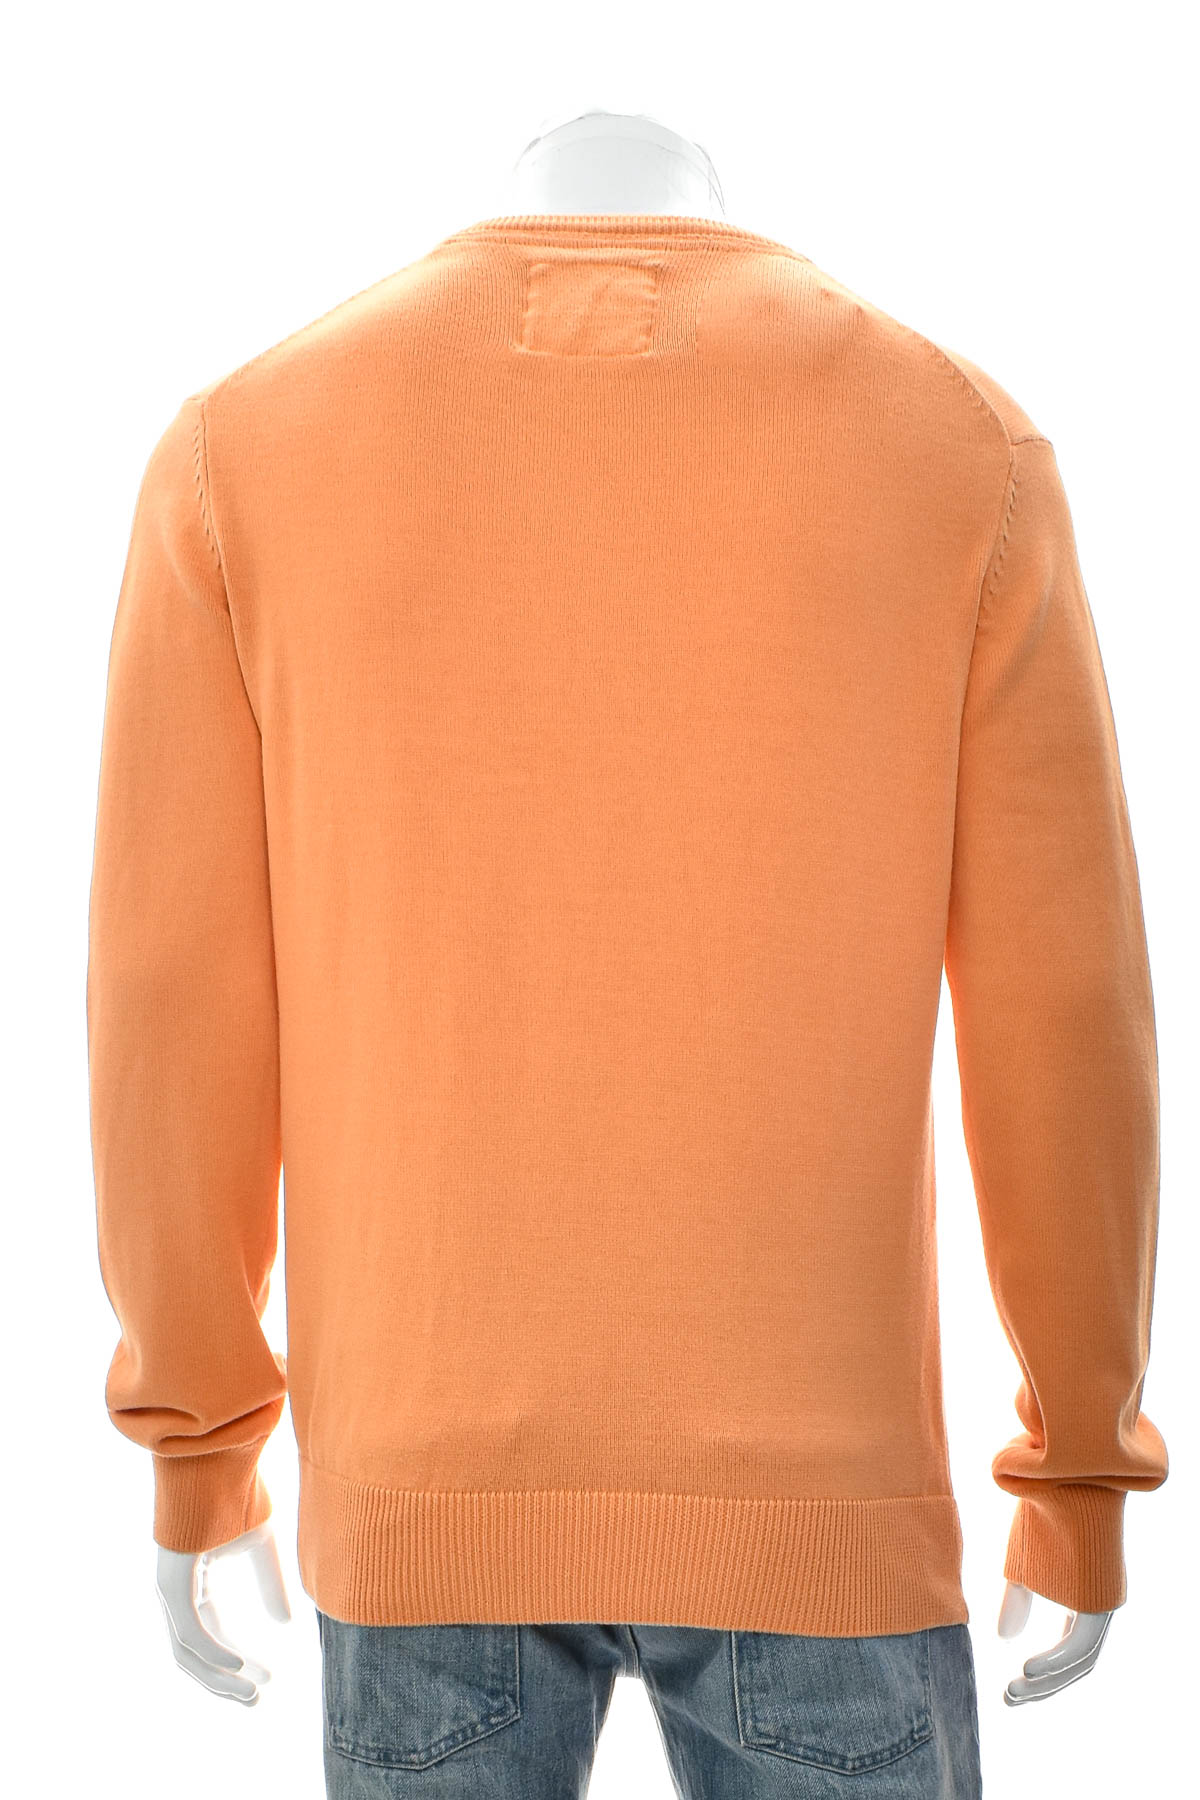 Men's sweater - L.O.G.G. - 1